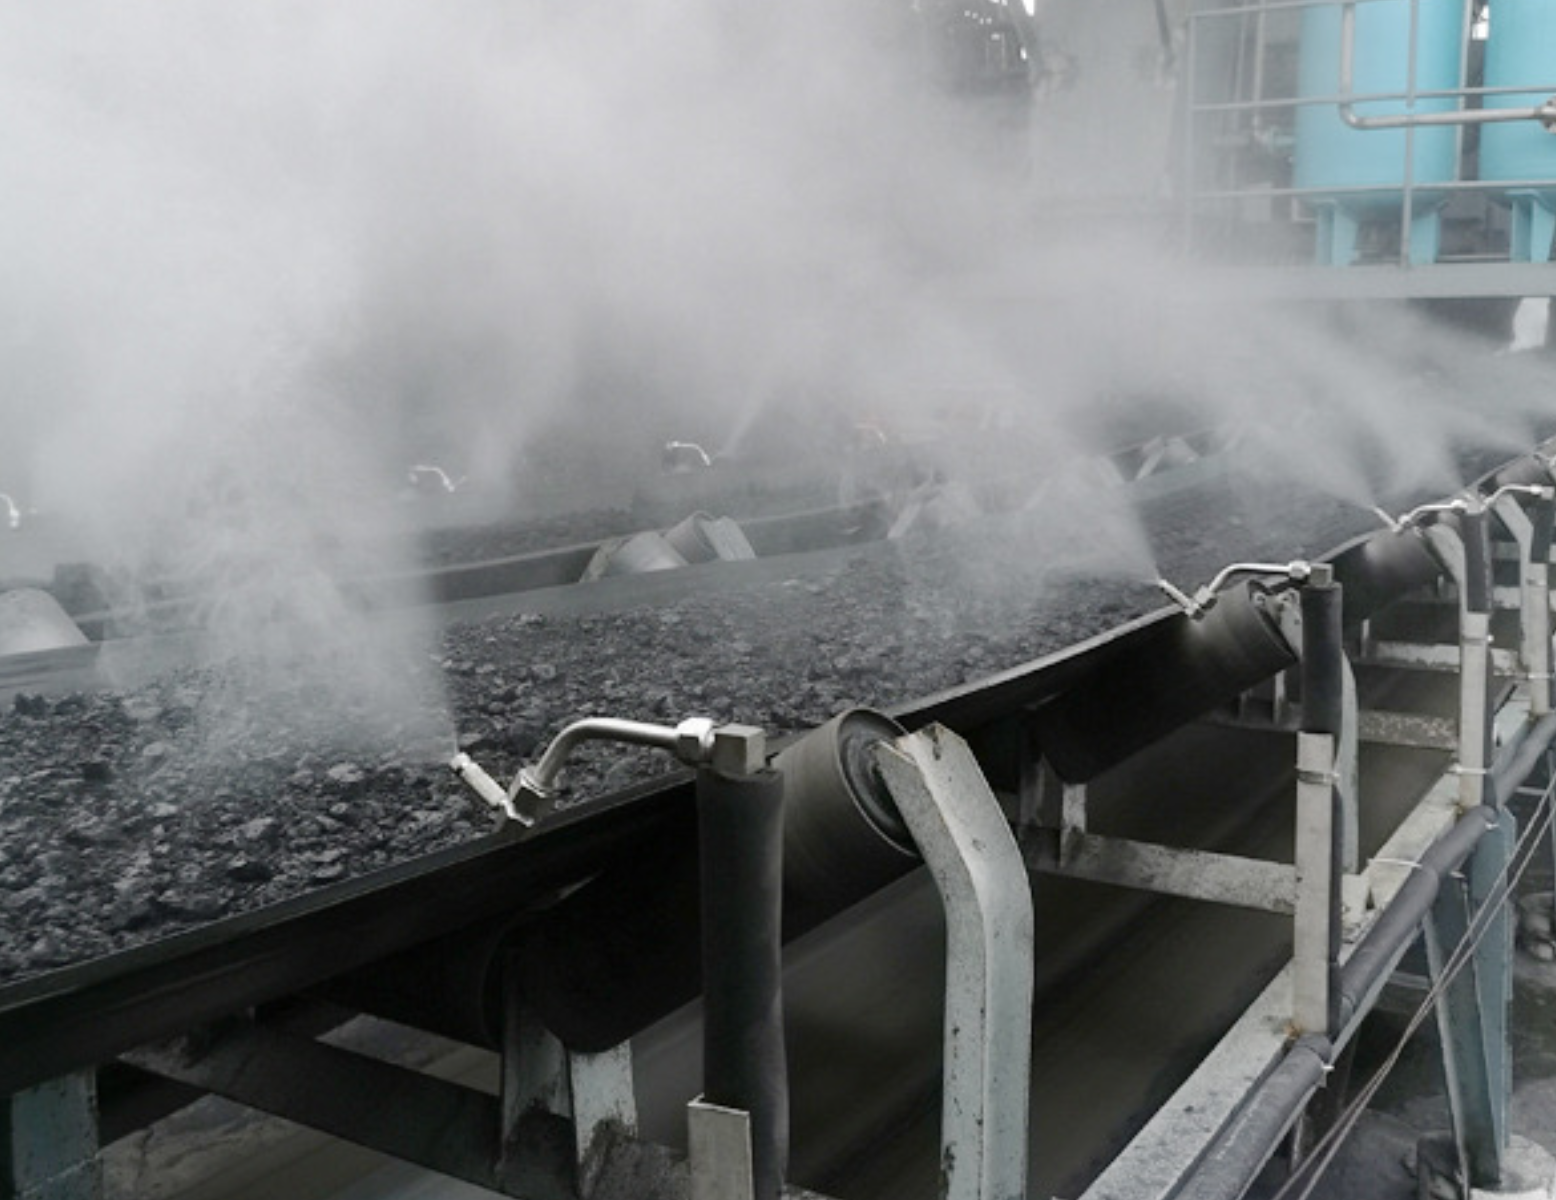 Mist spraying system in the gravel conveyor belt